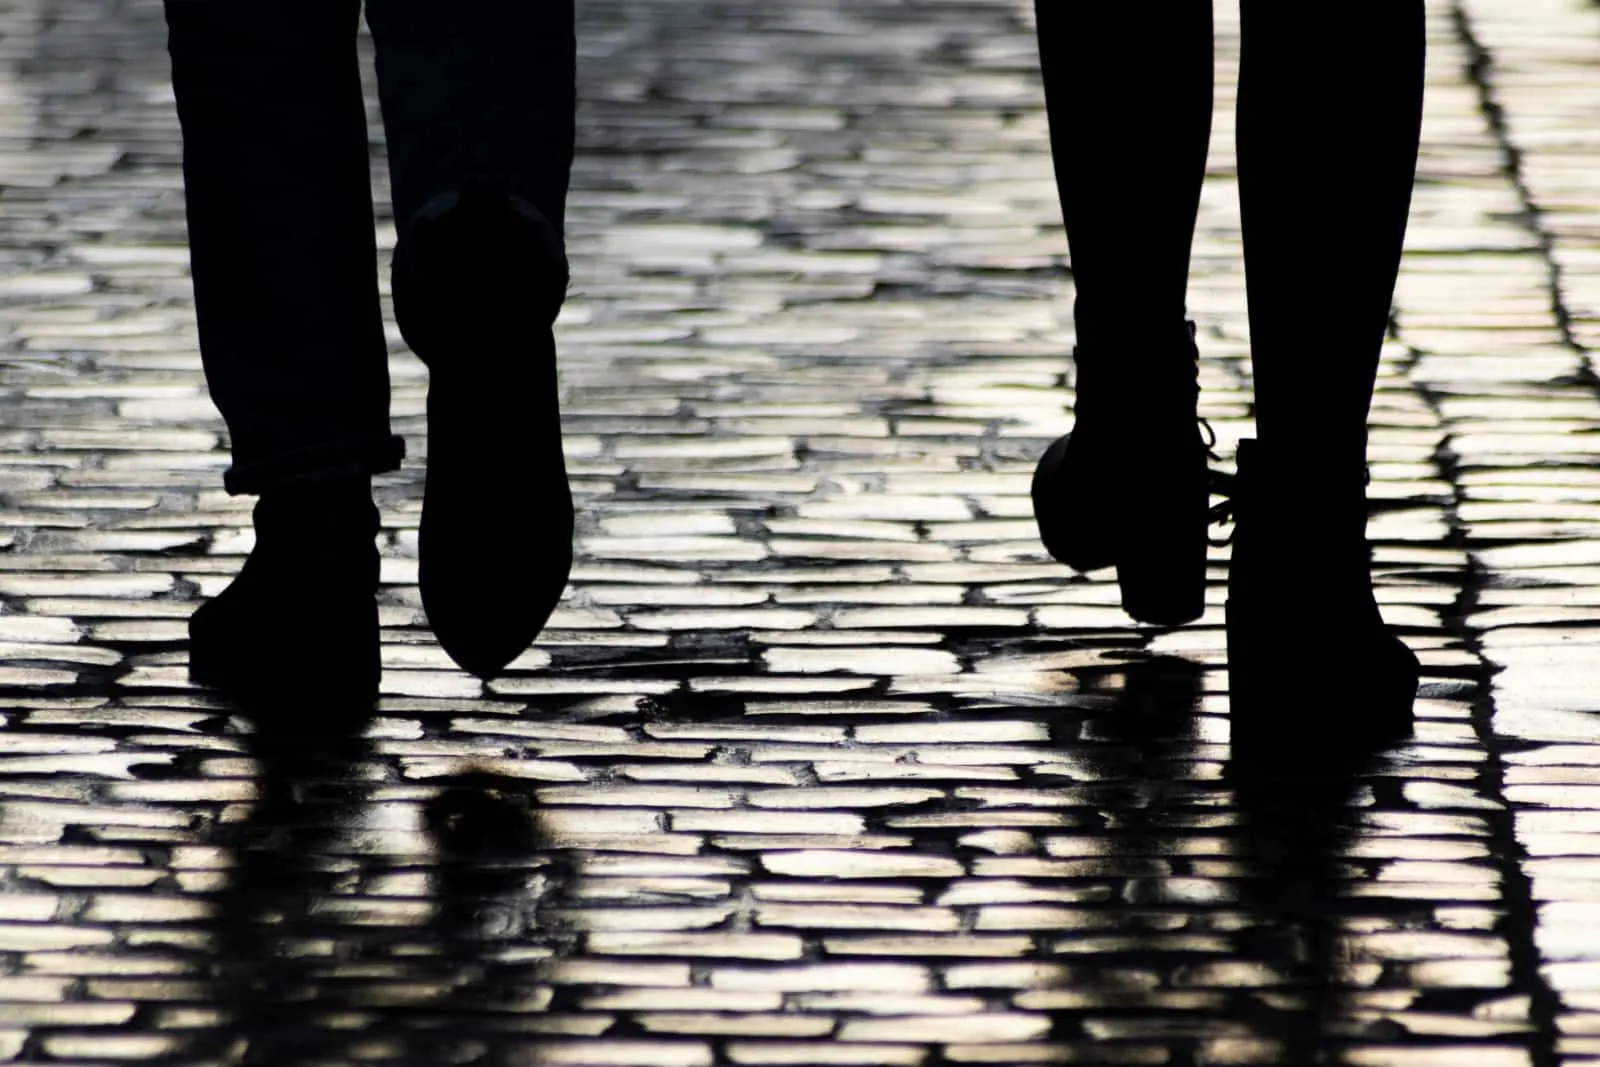 Two pedestrians walking down on evening street.